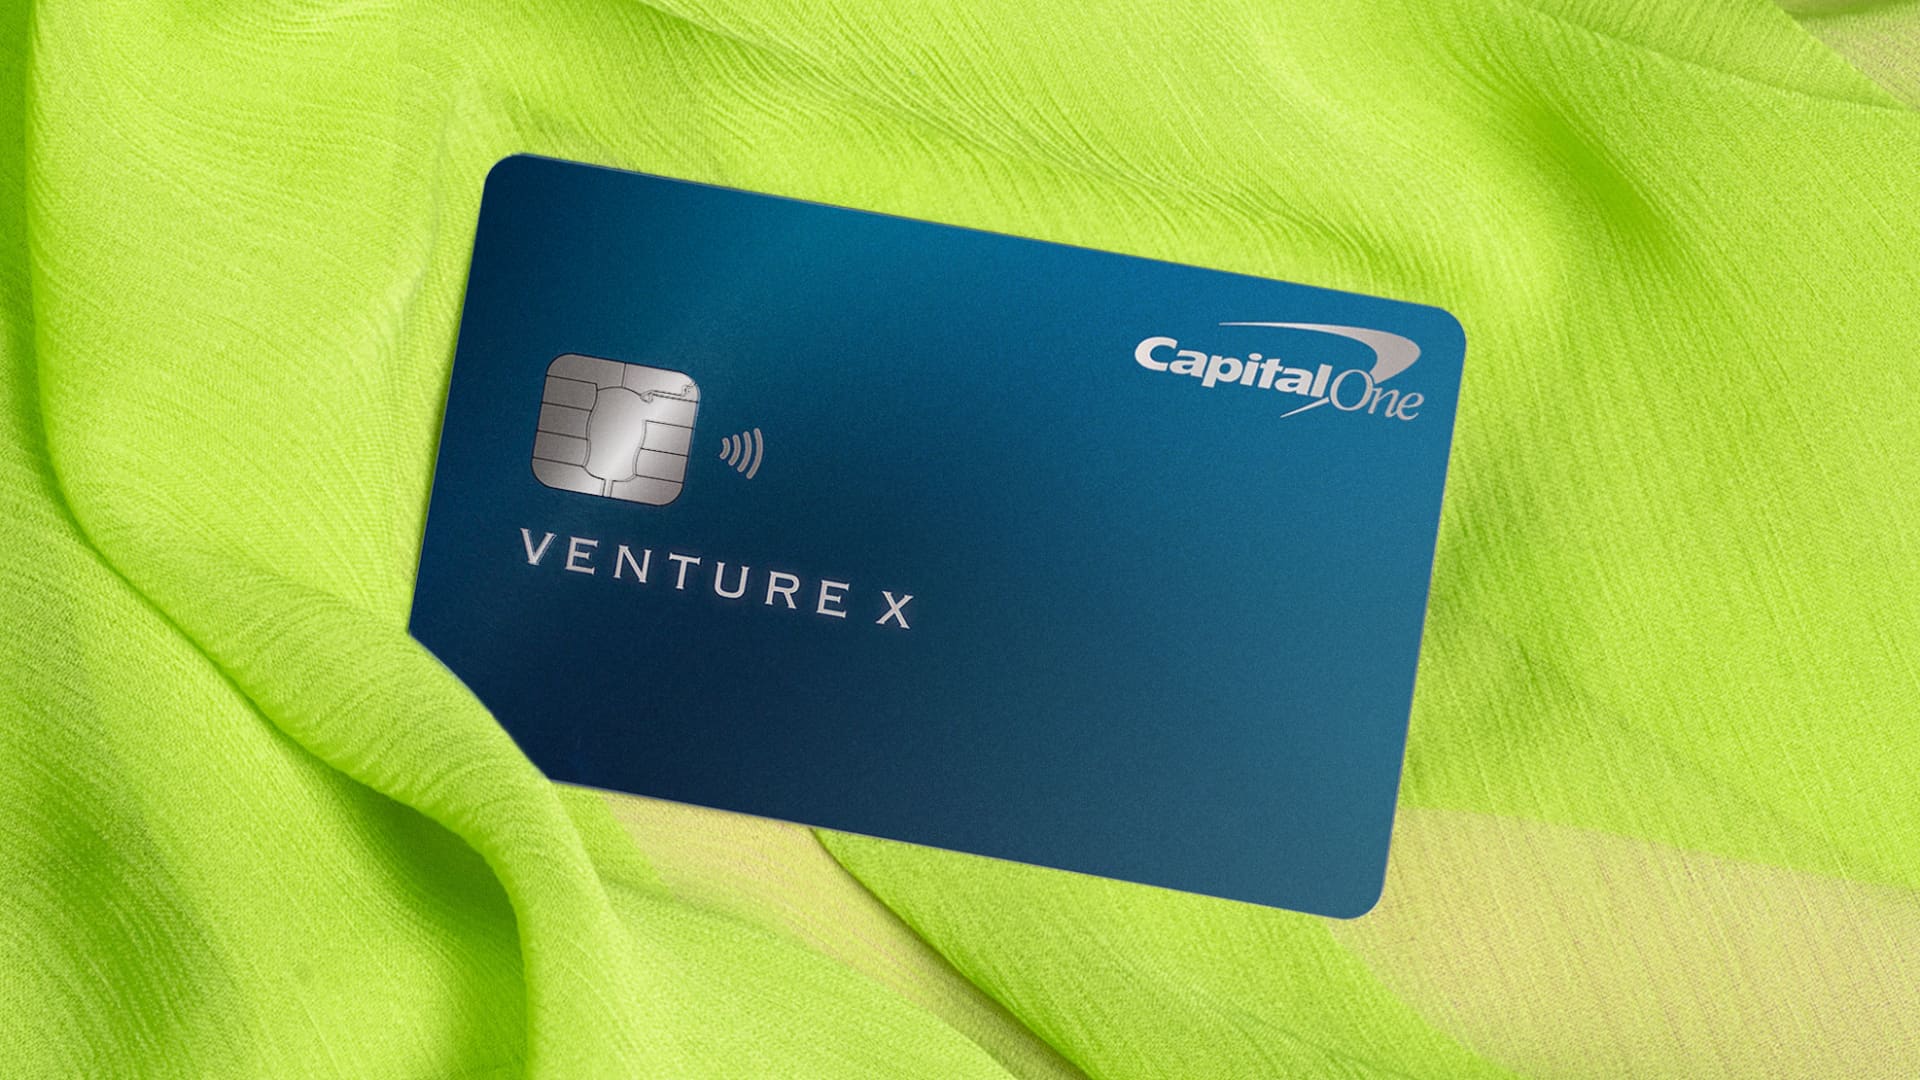 My 6 favorite Capital One Venture X benefits